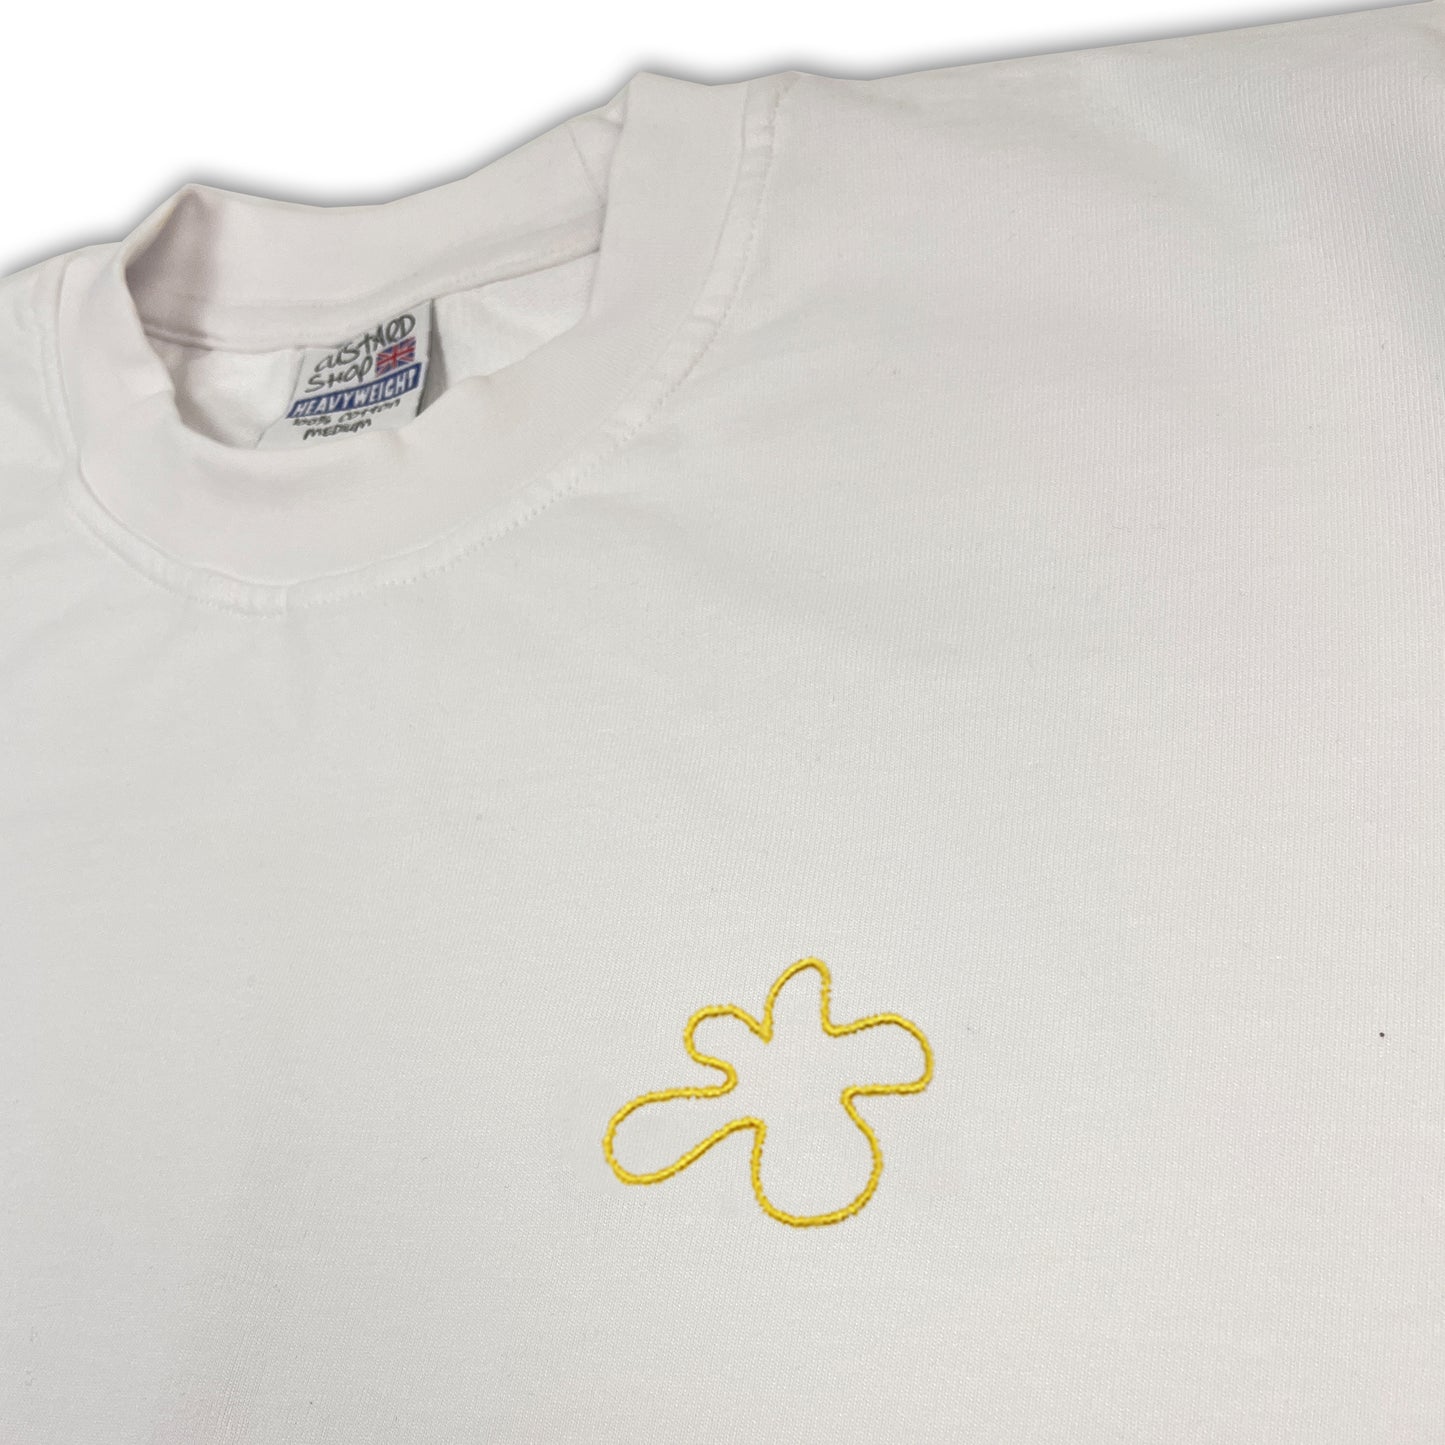 Heavyweight Embroidered Splodge T-Shirt | White